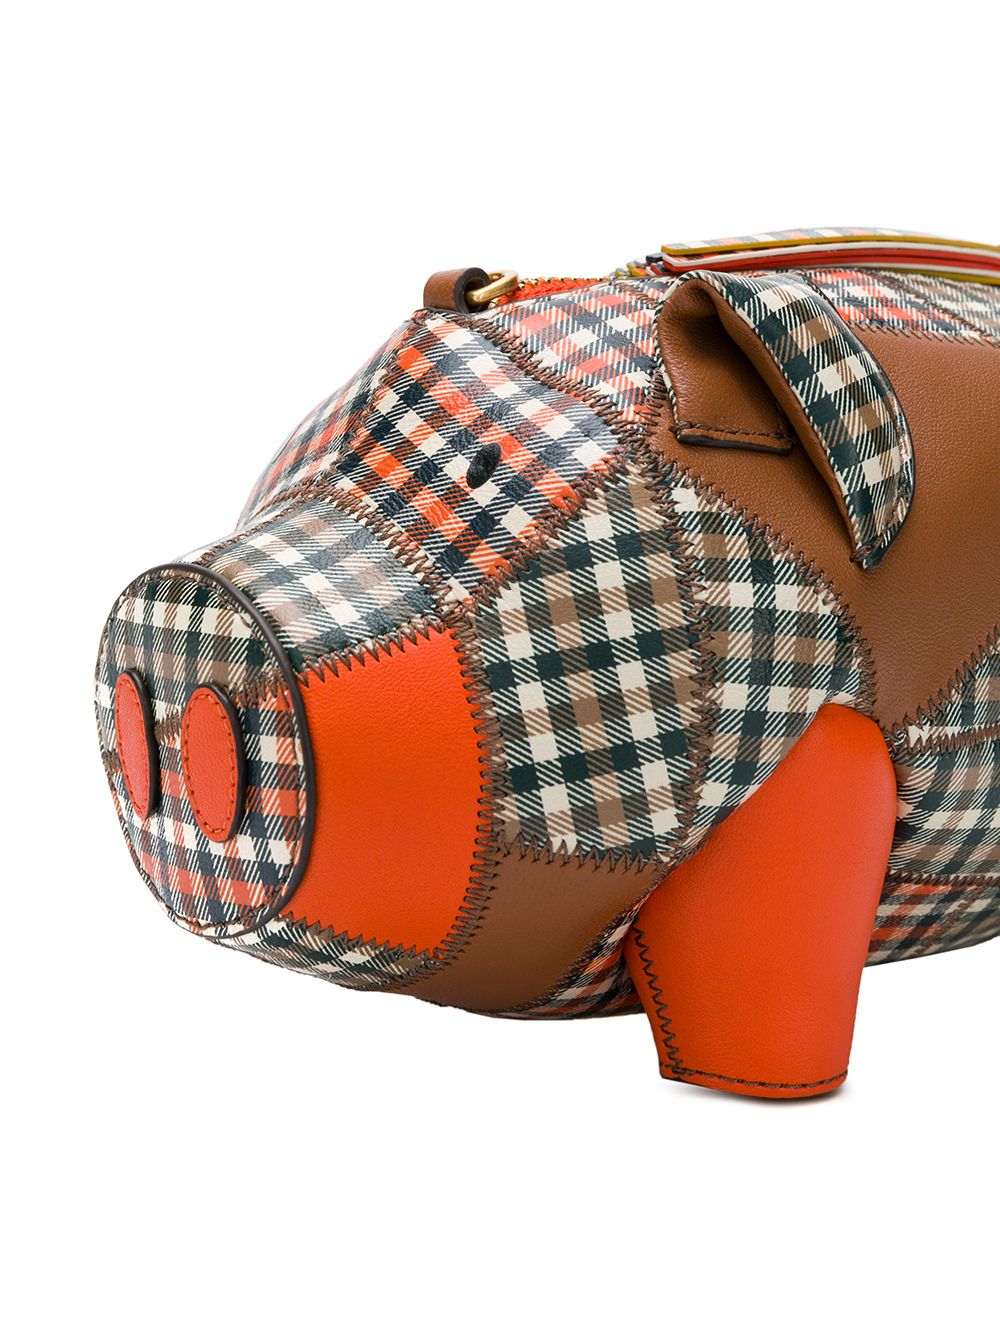 tory burch pig purse